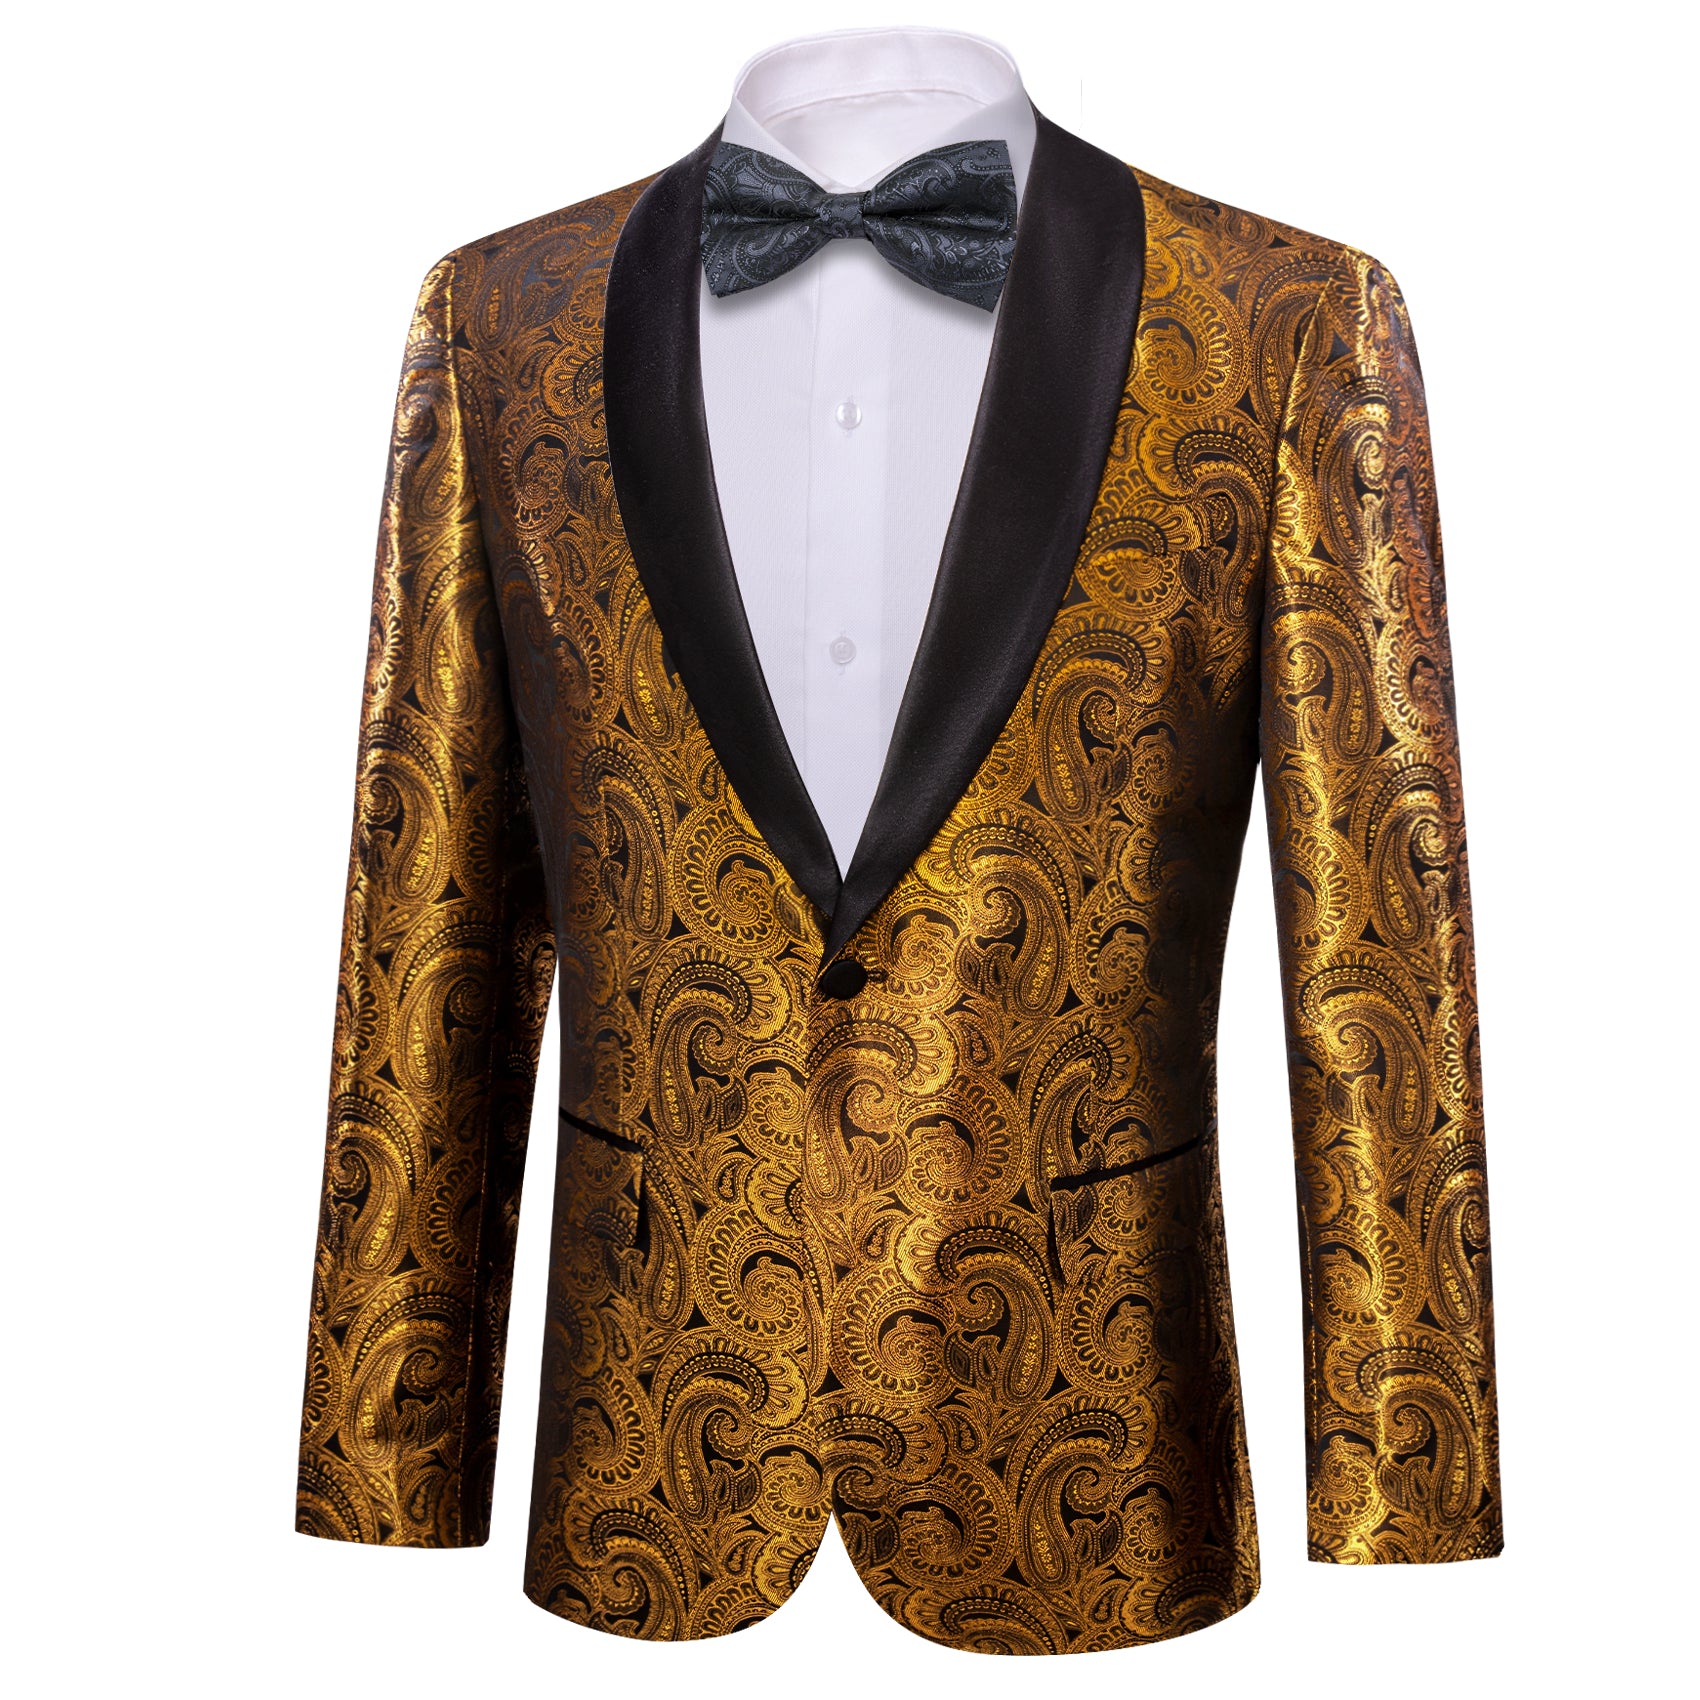 Barry Wang Men's Blazer Brown Gold Floral One Button Stylish Suit mens brown suit jacket